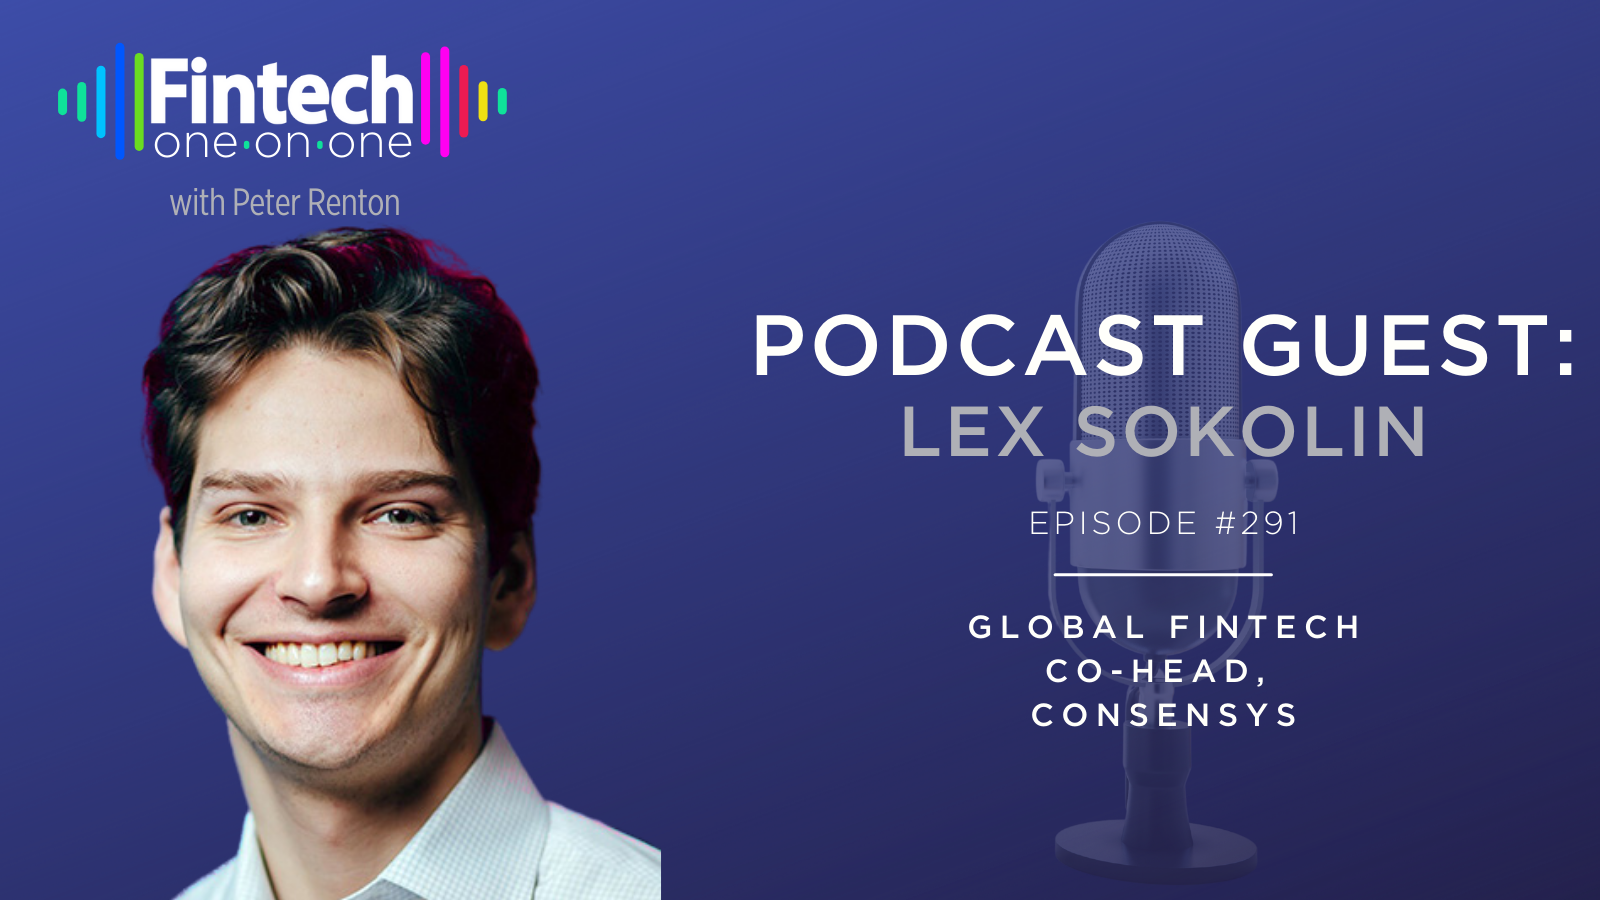 Lex Sokolin, Co-Head & Chief Marketing Officer at ConsenSys